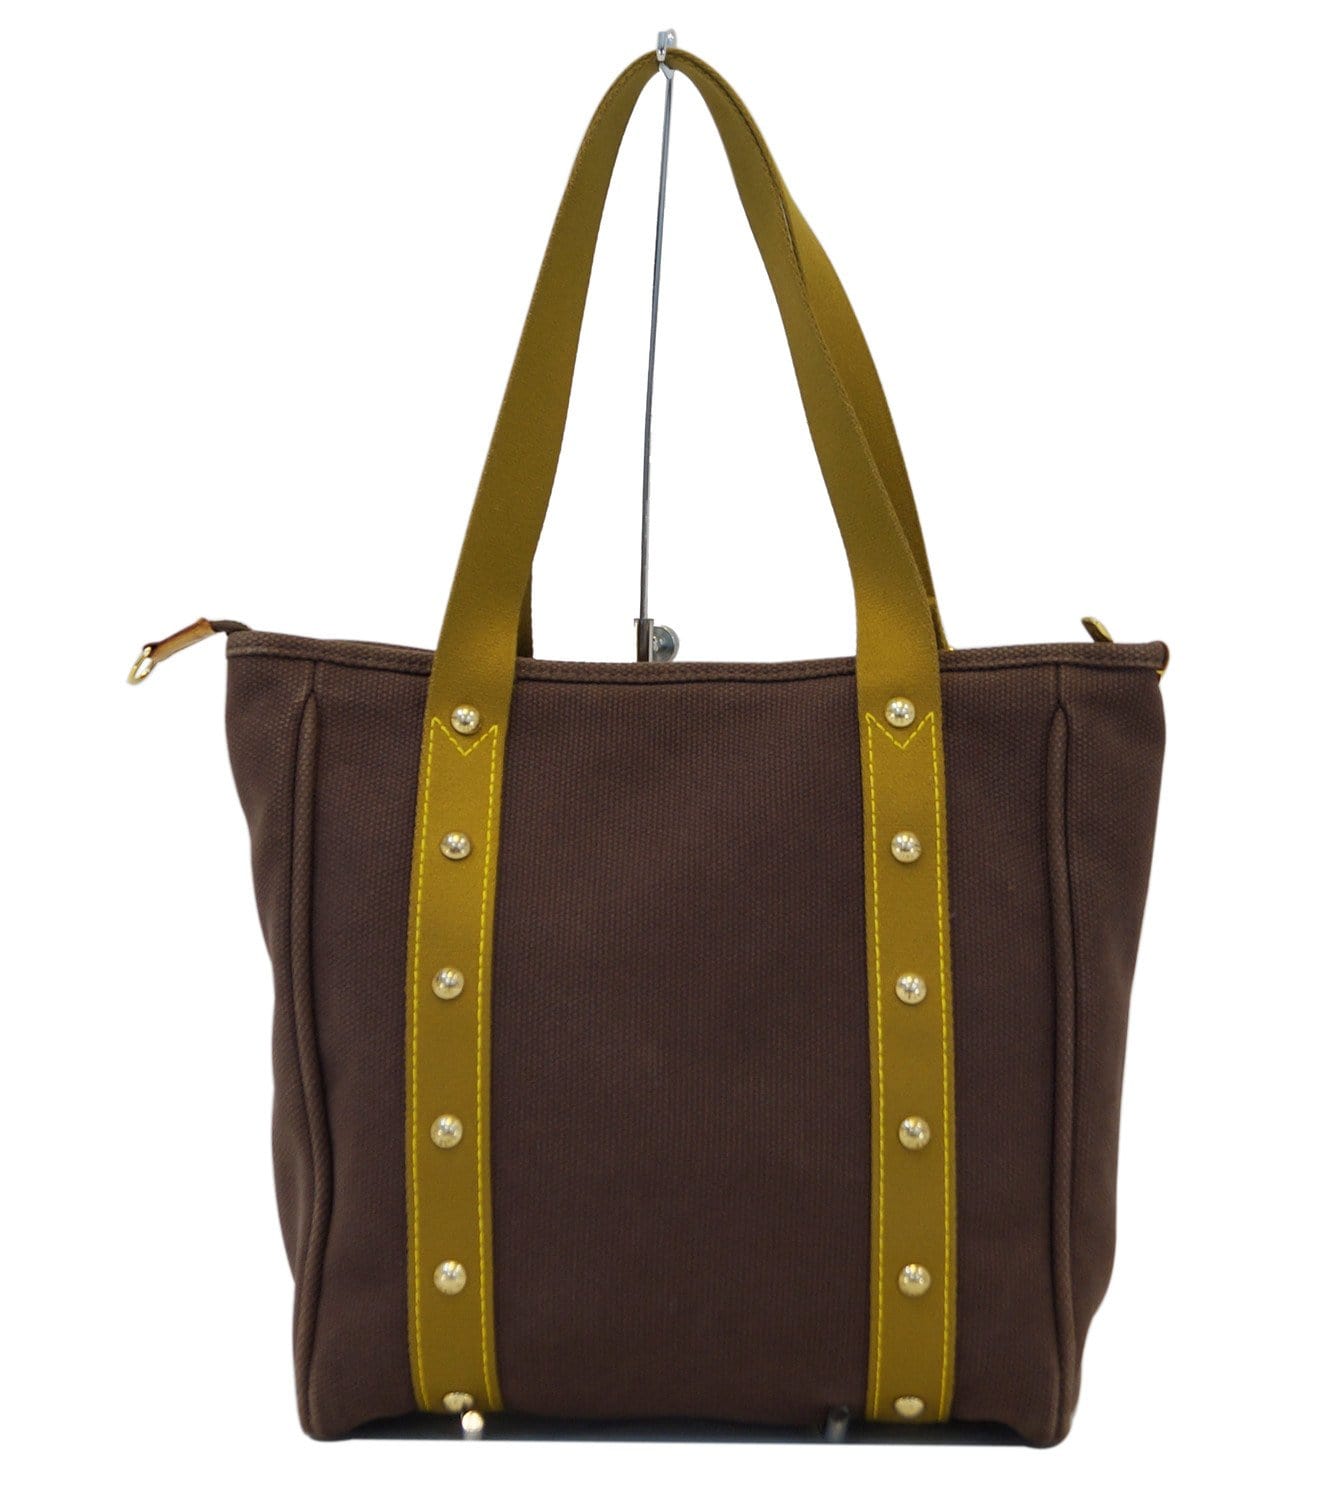 Louis Vuitton Antigua shopping bag in brown and green canvas